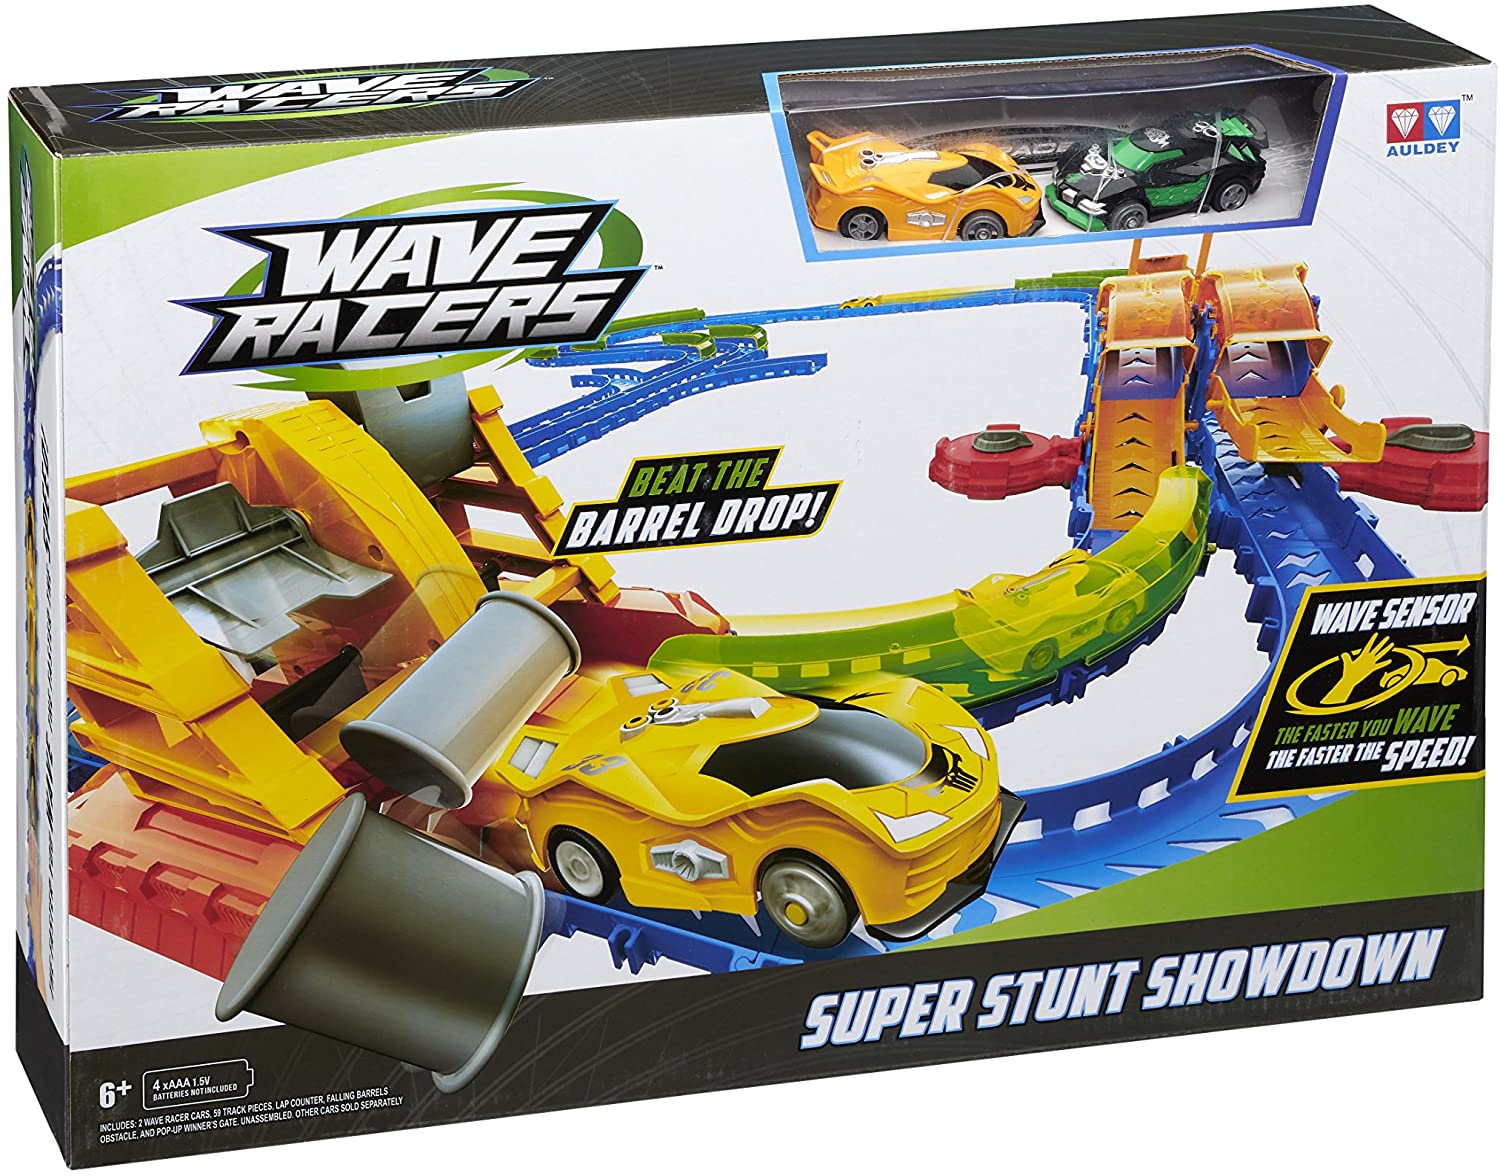 Wave Racers Super Stunt Showdown Track Set tolle Auto Rennbahn inkl. 2 Autos